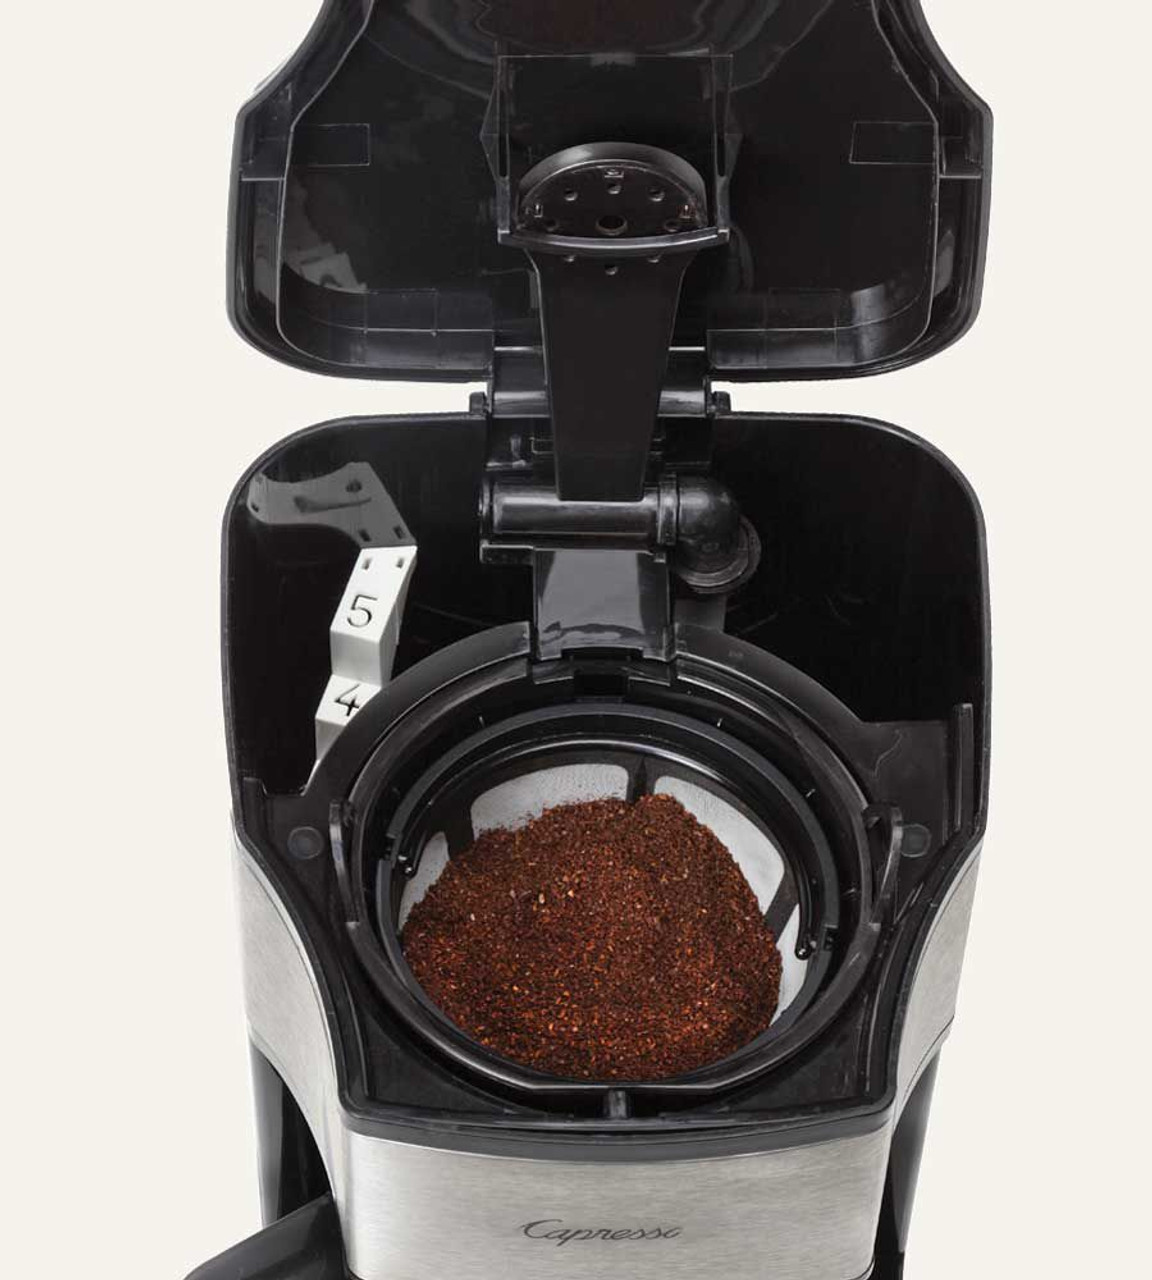 Capresso Mini Drip Programmable Coffee Maker 5-Cup - Fante's Kitchen Shop -  Since 1906